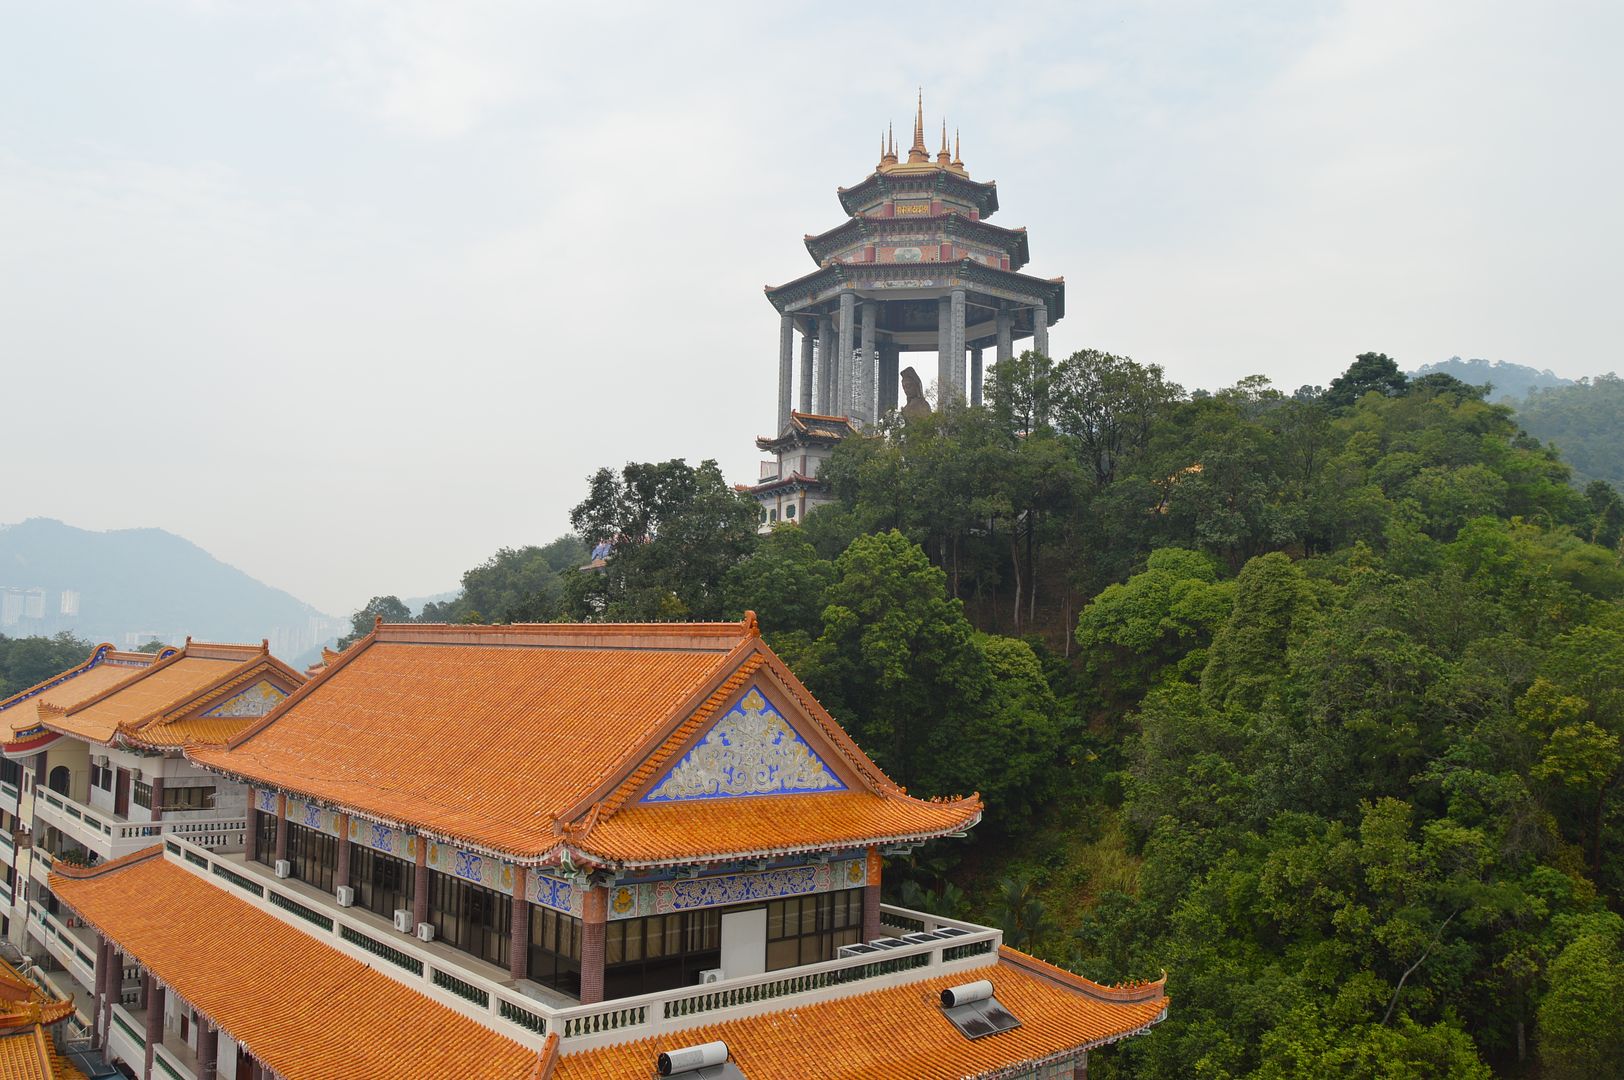 GEORGETOWN (Templo Kek Lok Si + Colina Penang) - Singapur y Malasia continental en 18 dias (Sept 2014) (6)